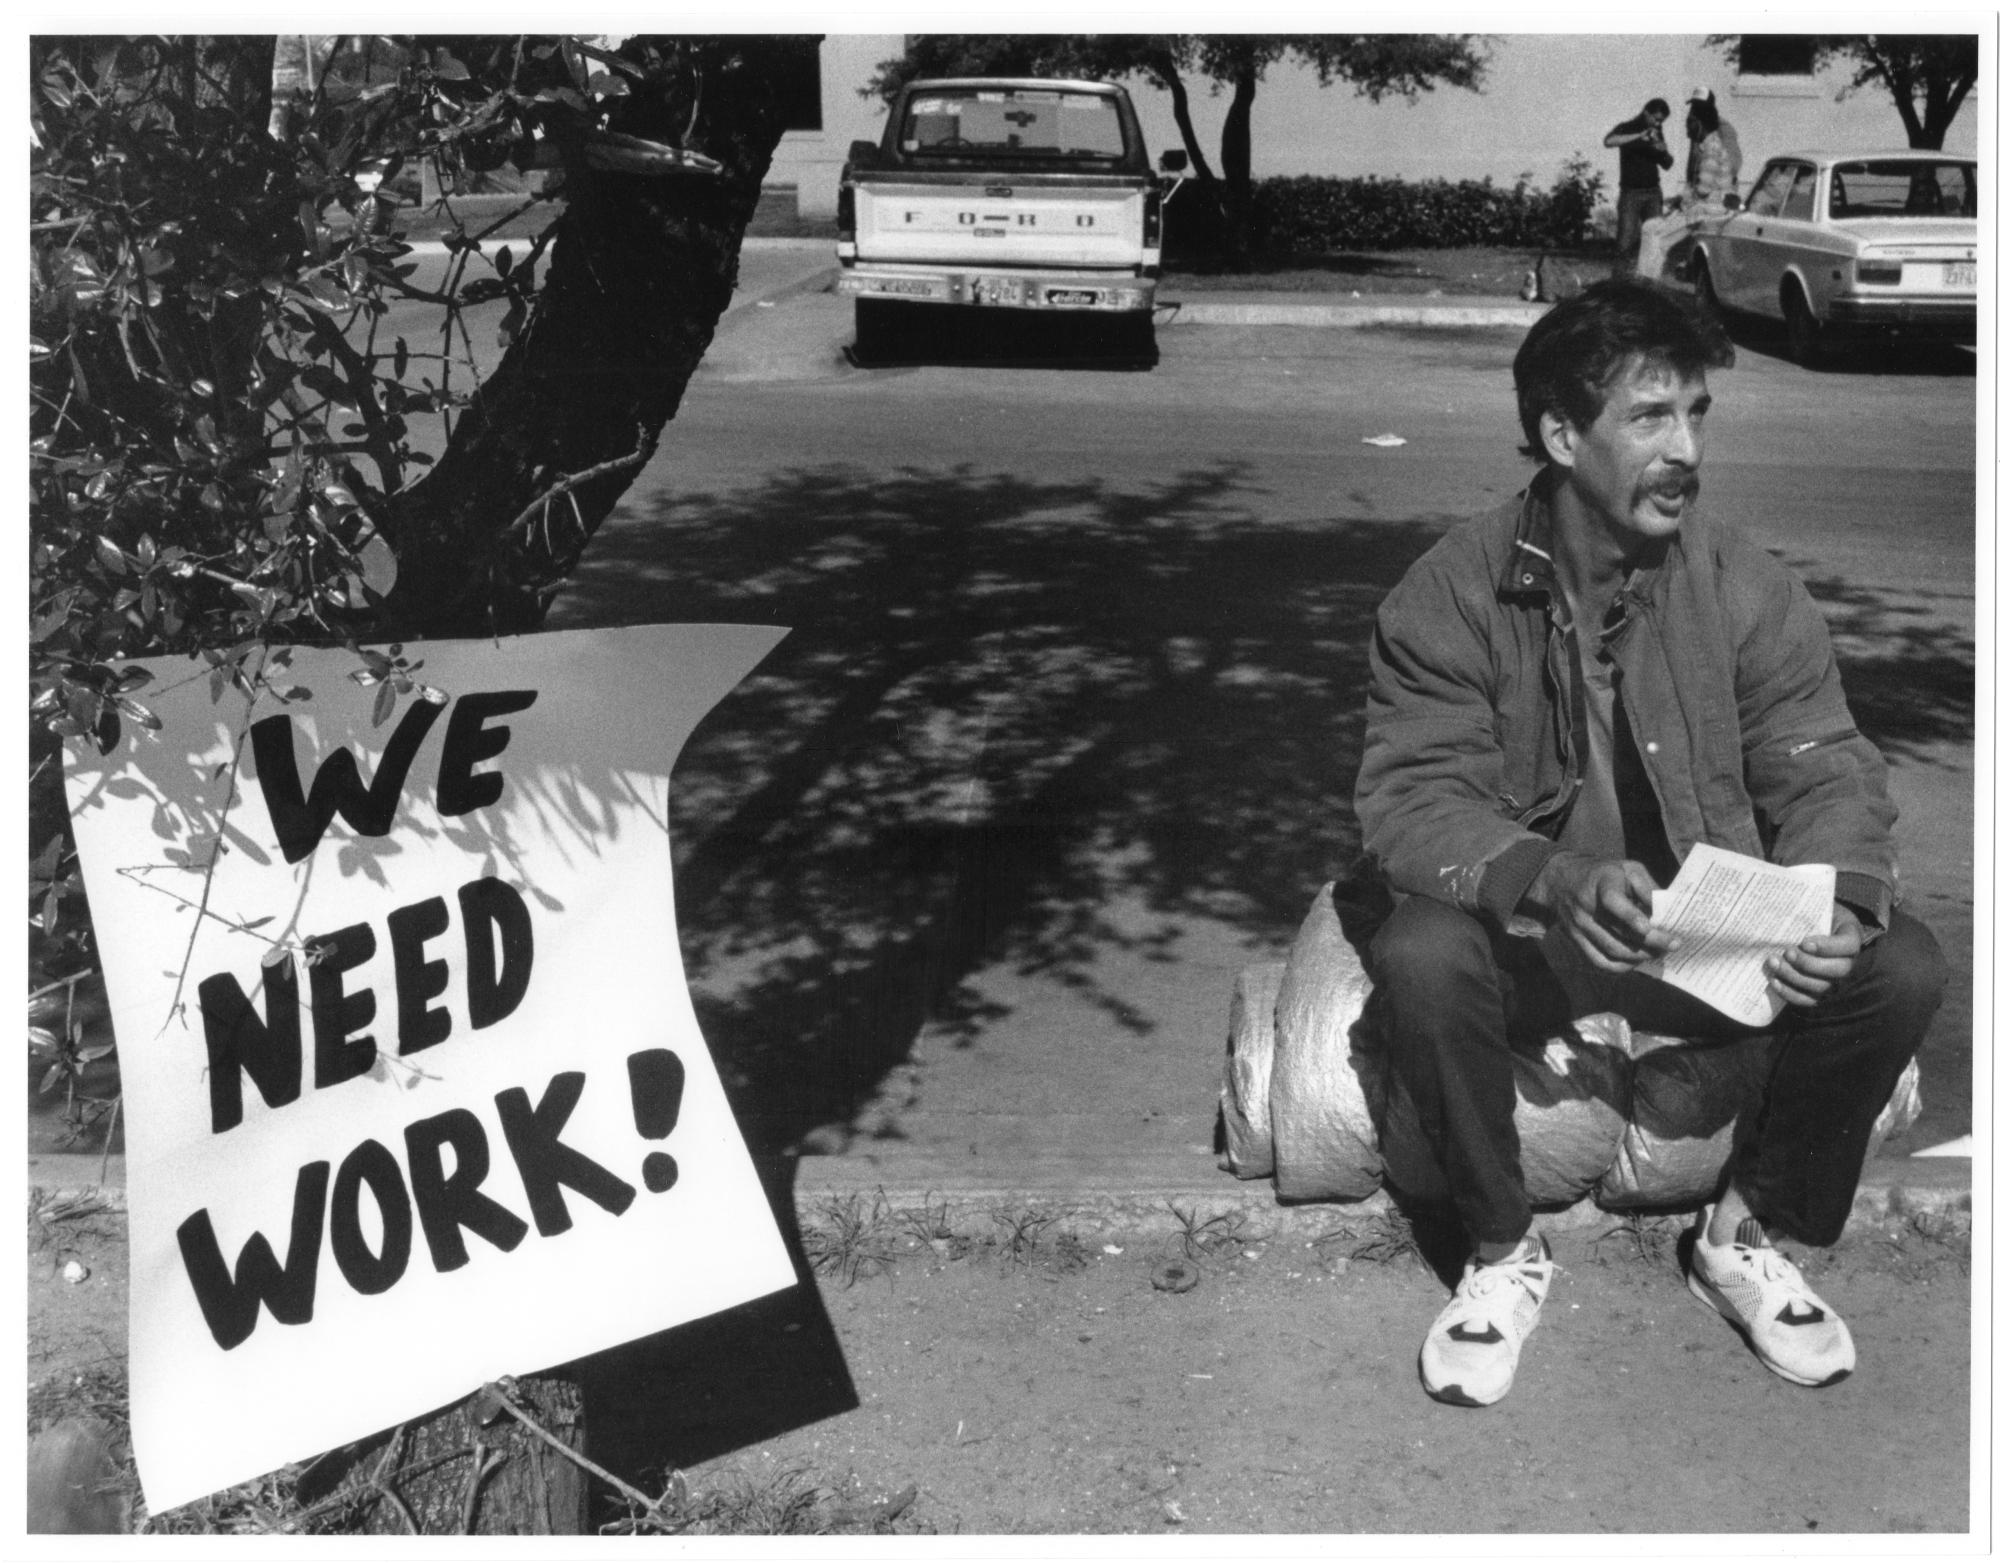 Daily Texan (1991-1992) - Need Work